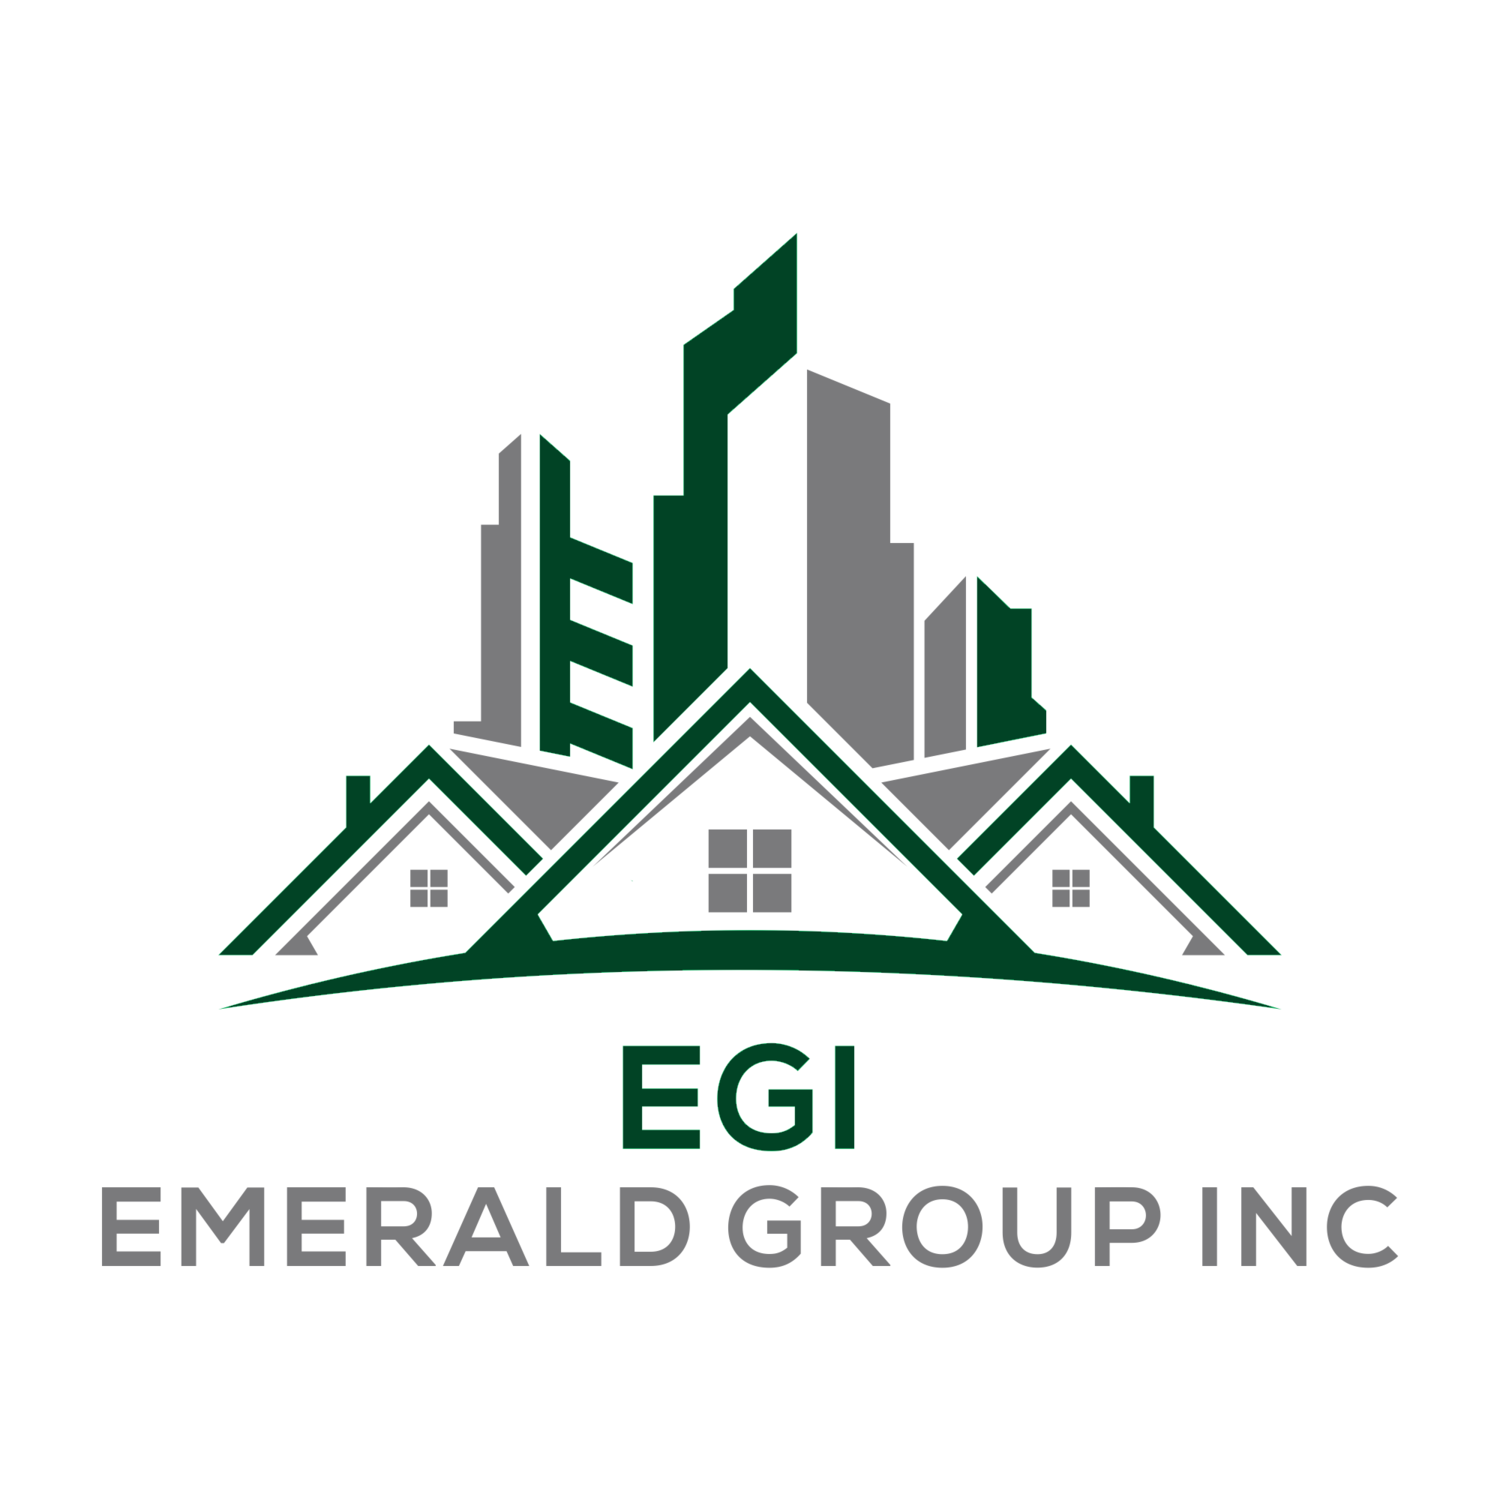 Emerald Group Inc. 